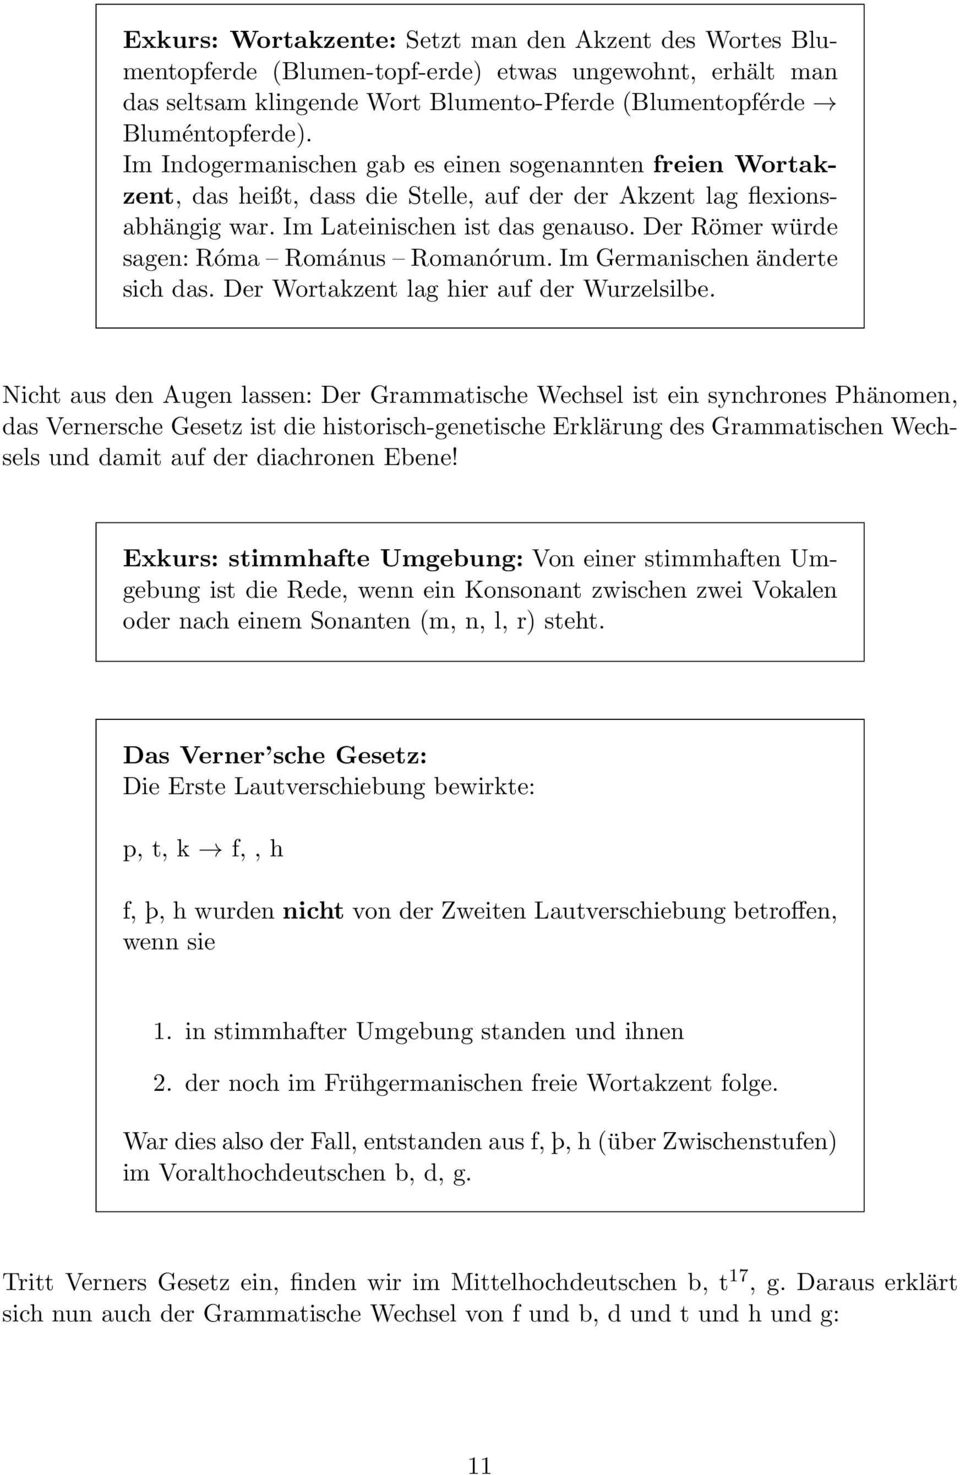 Mittelhochdeutsche Kurzgrammatik Fabian Bross Pdf Kostenfreier Download